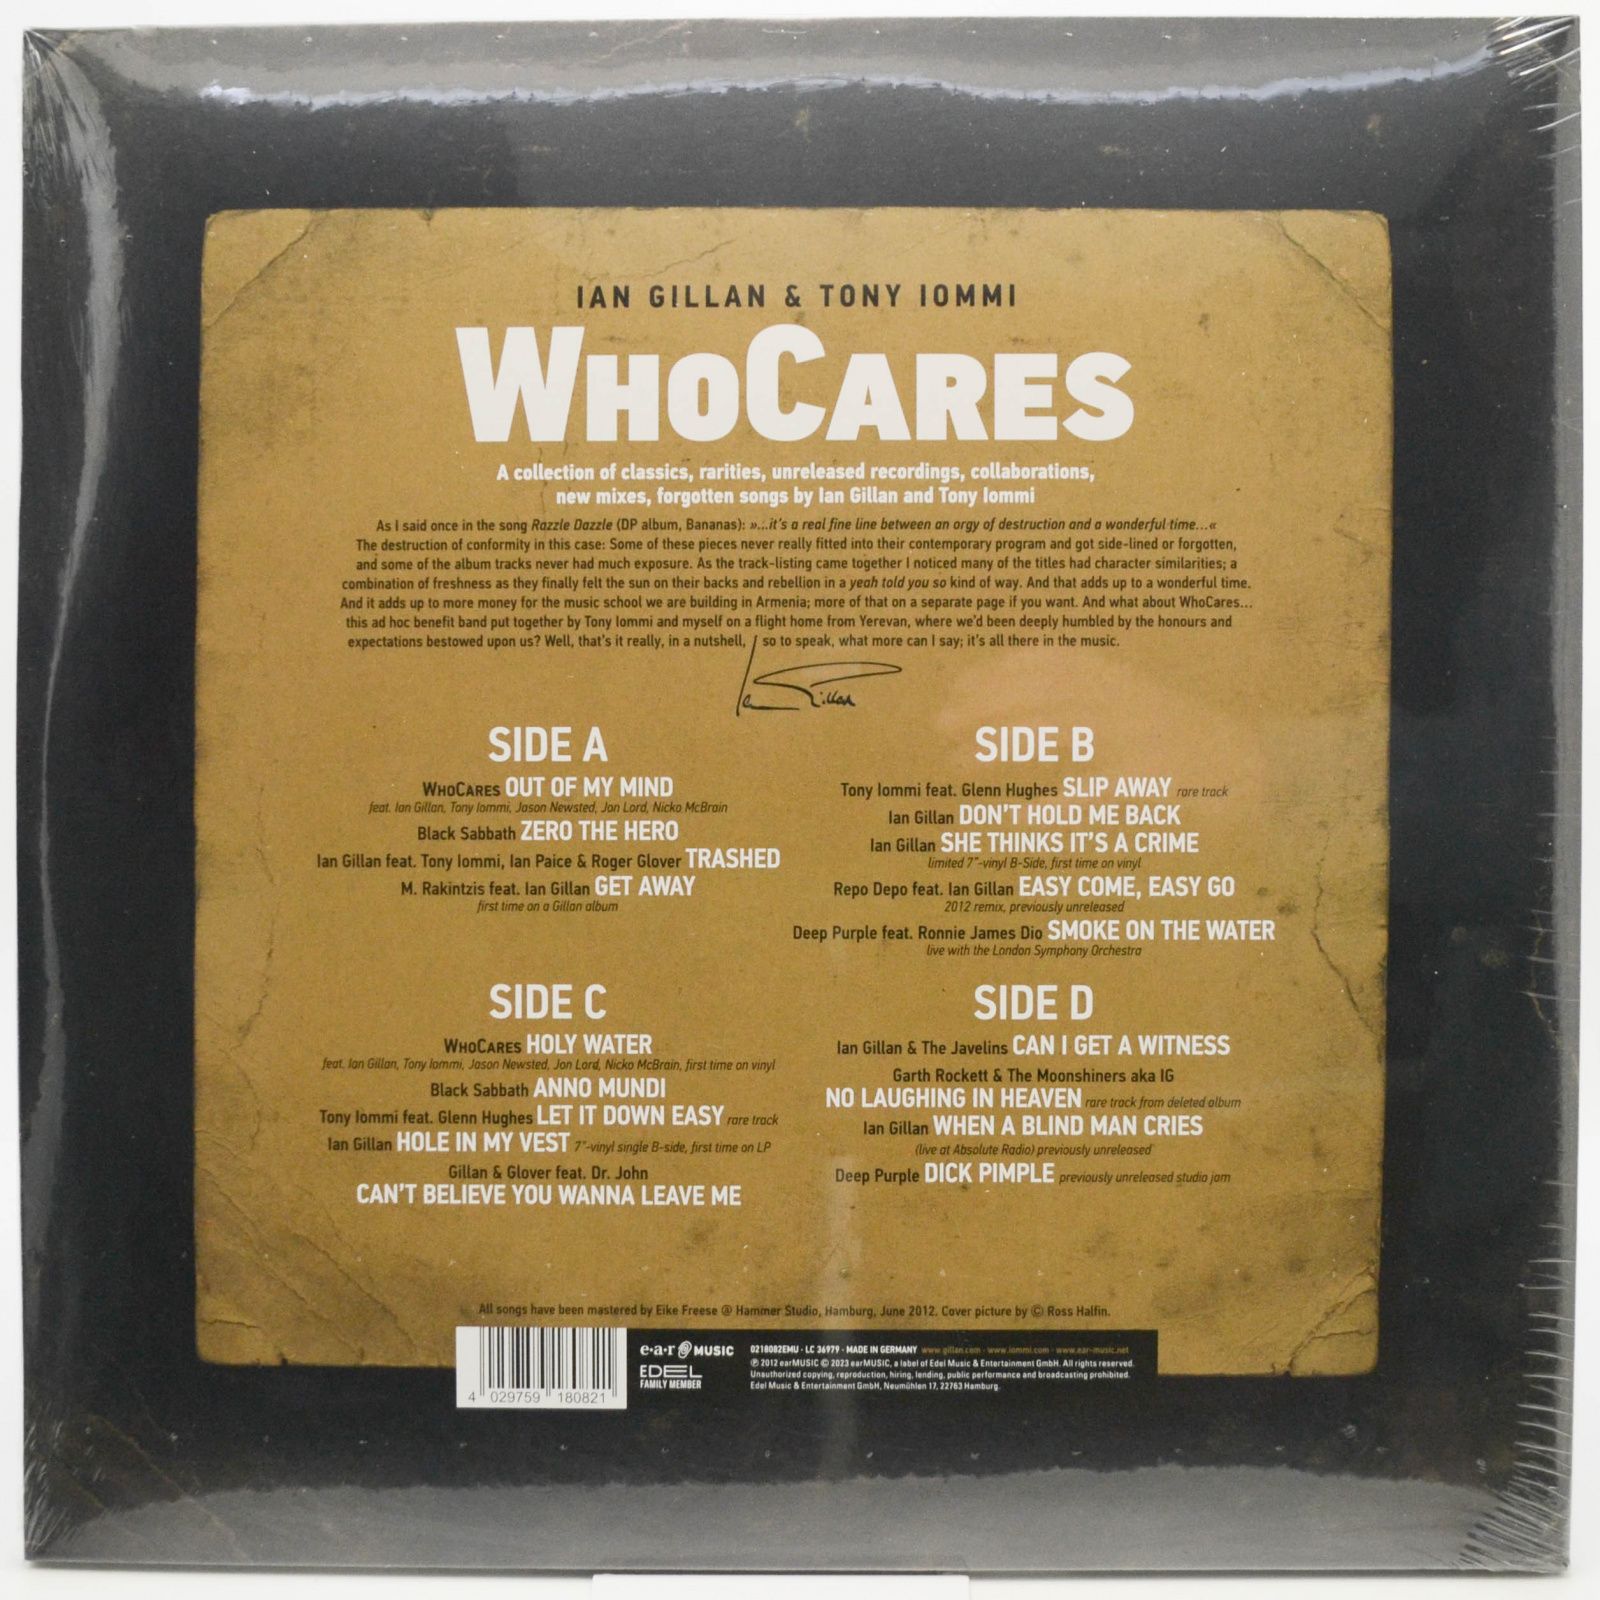 Ian Gillan & Tony Iommi — WhoCares (2LP), 2012